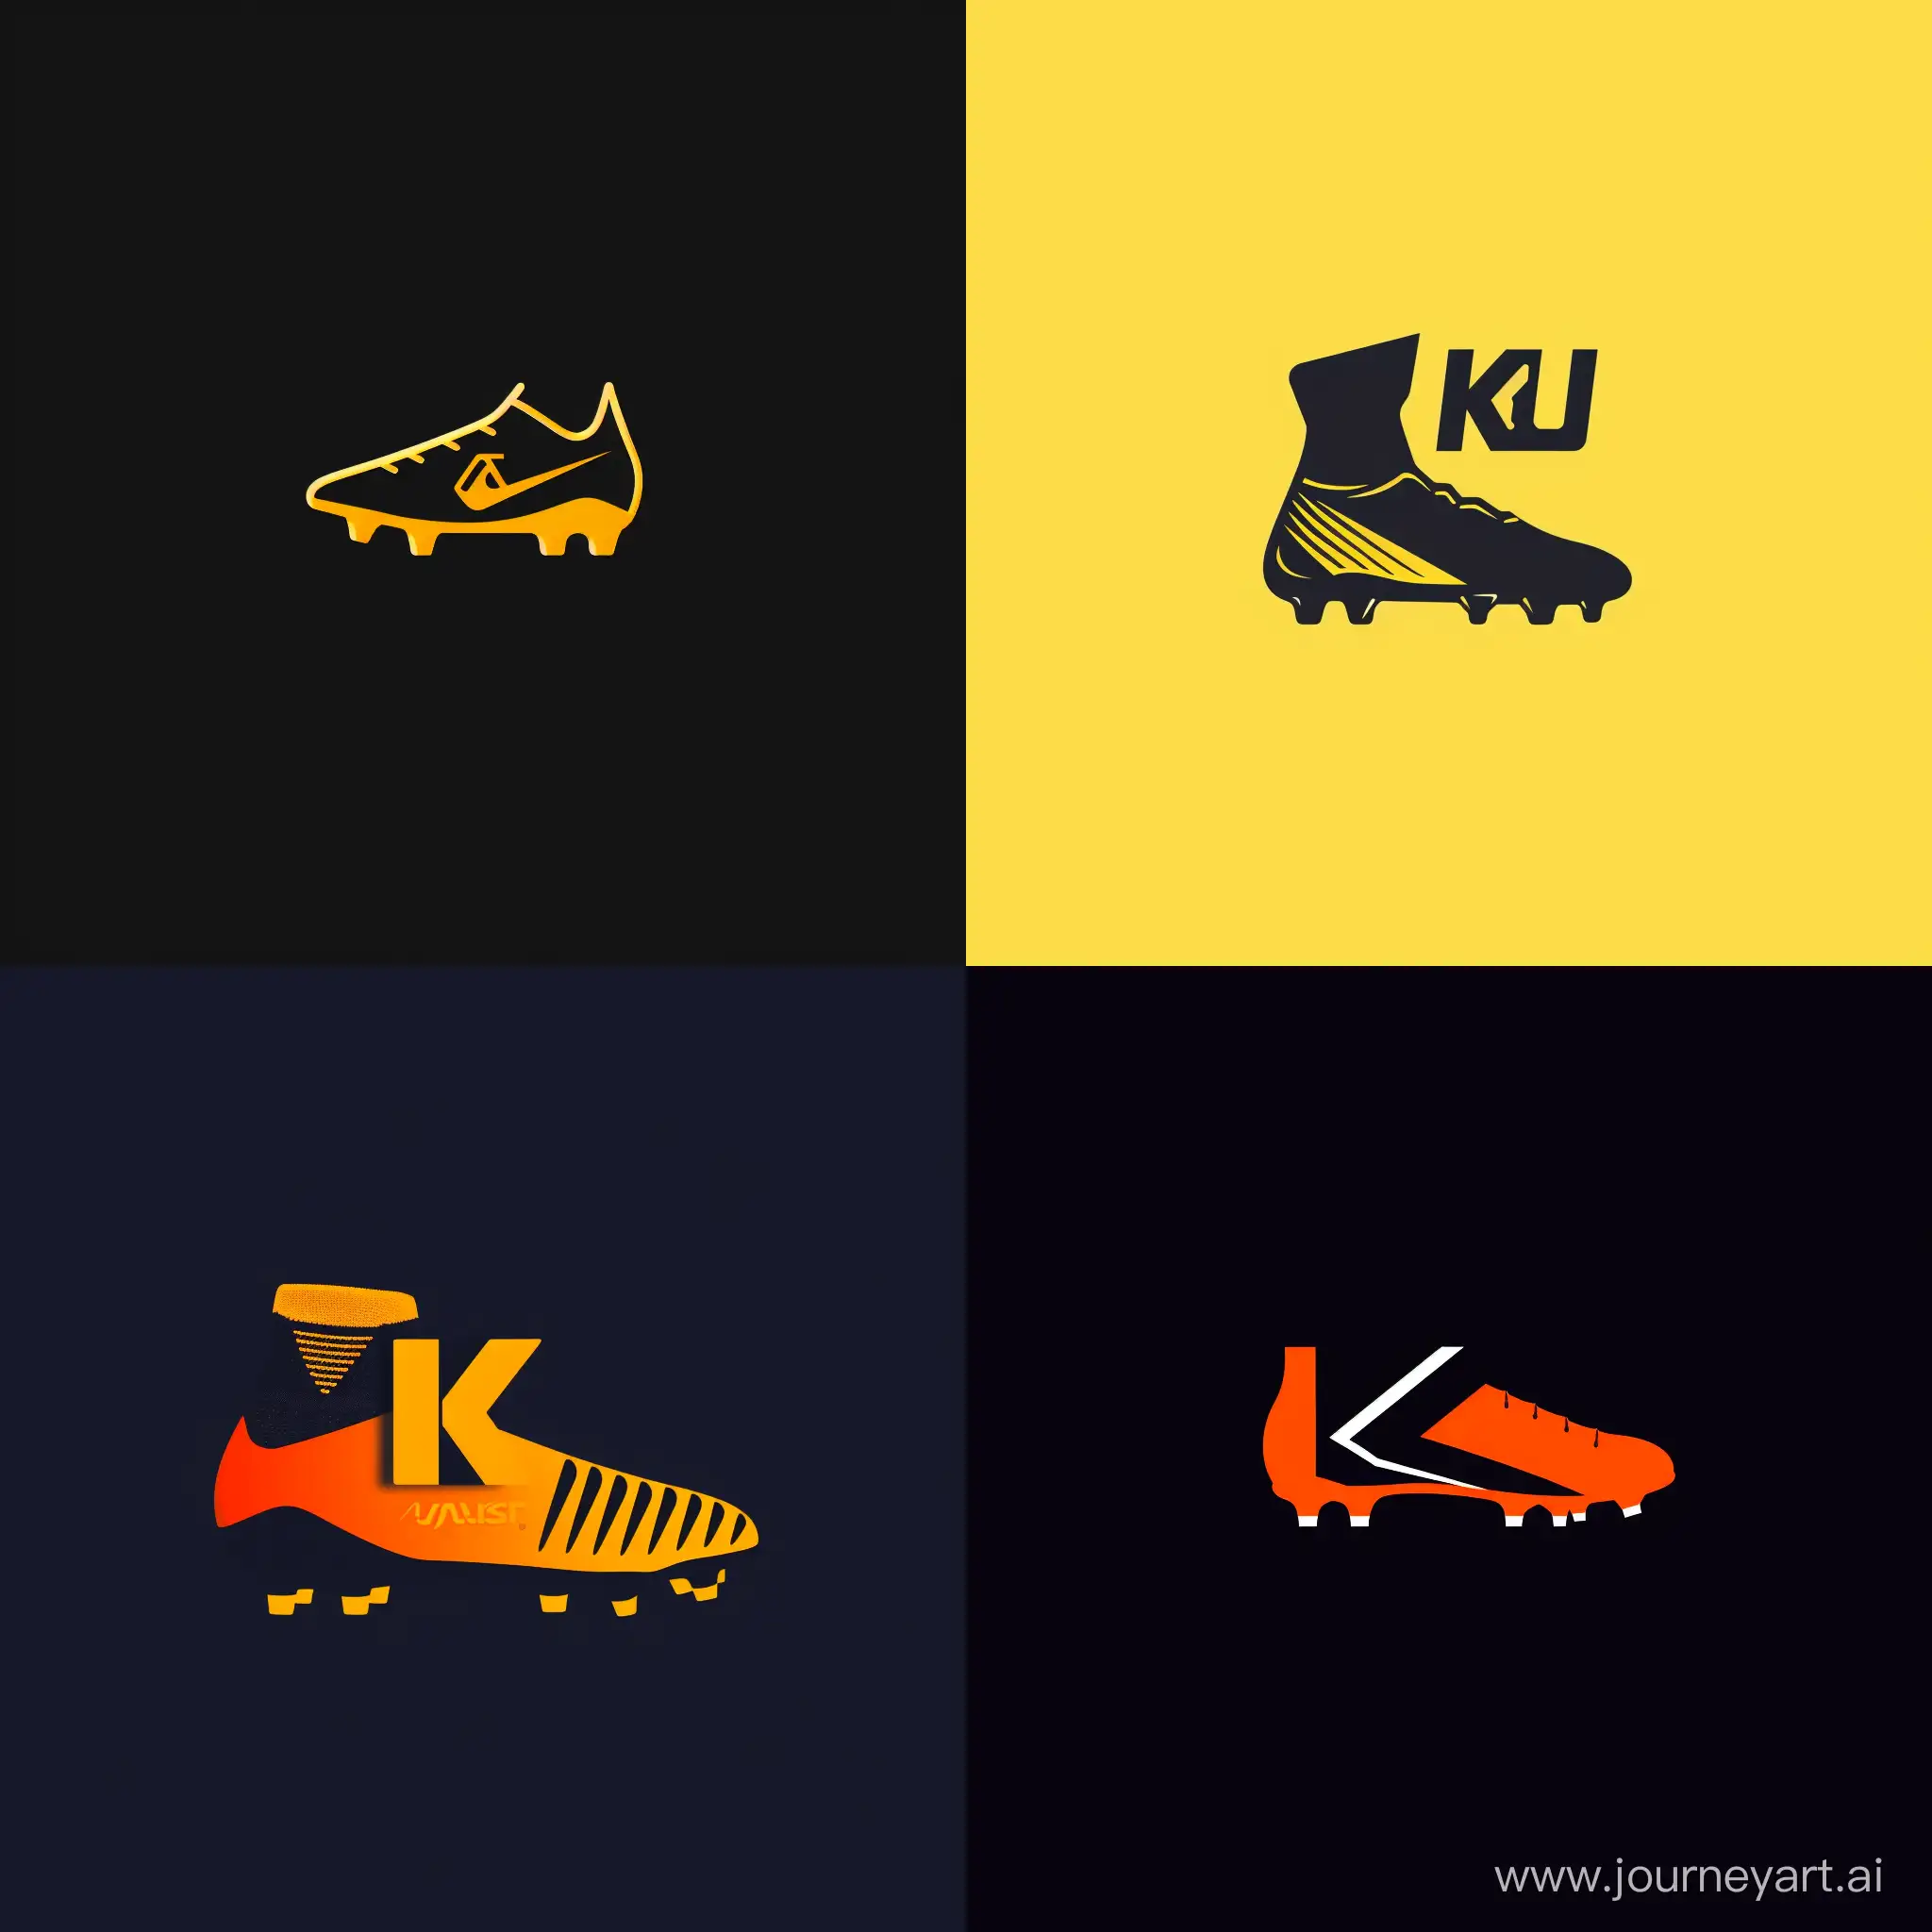 Minimalist-Football-Boot-Brand-Logo-with-KL-Text